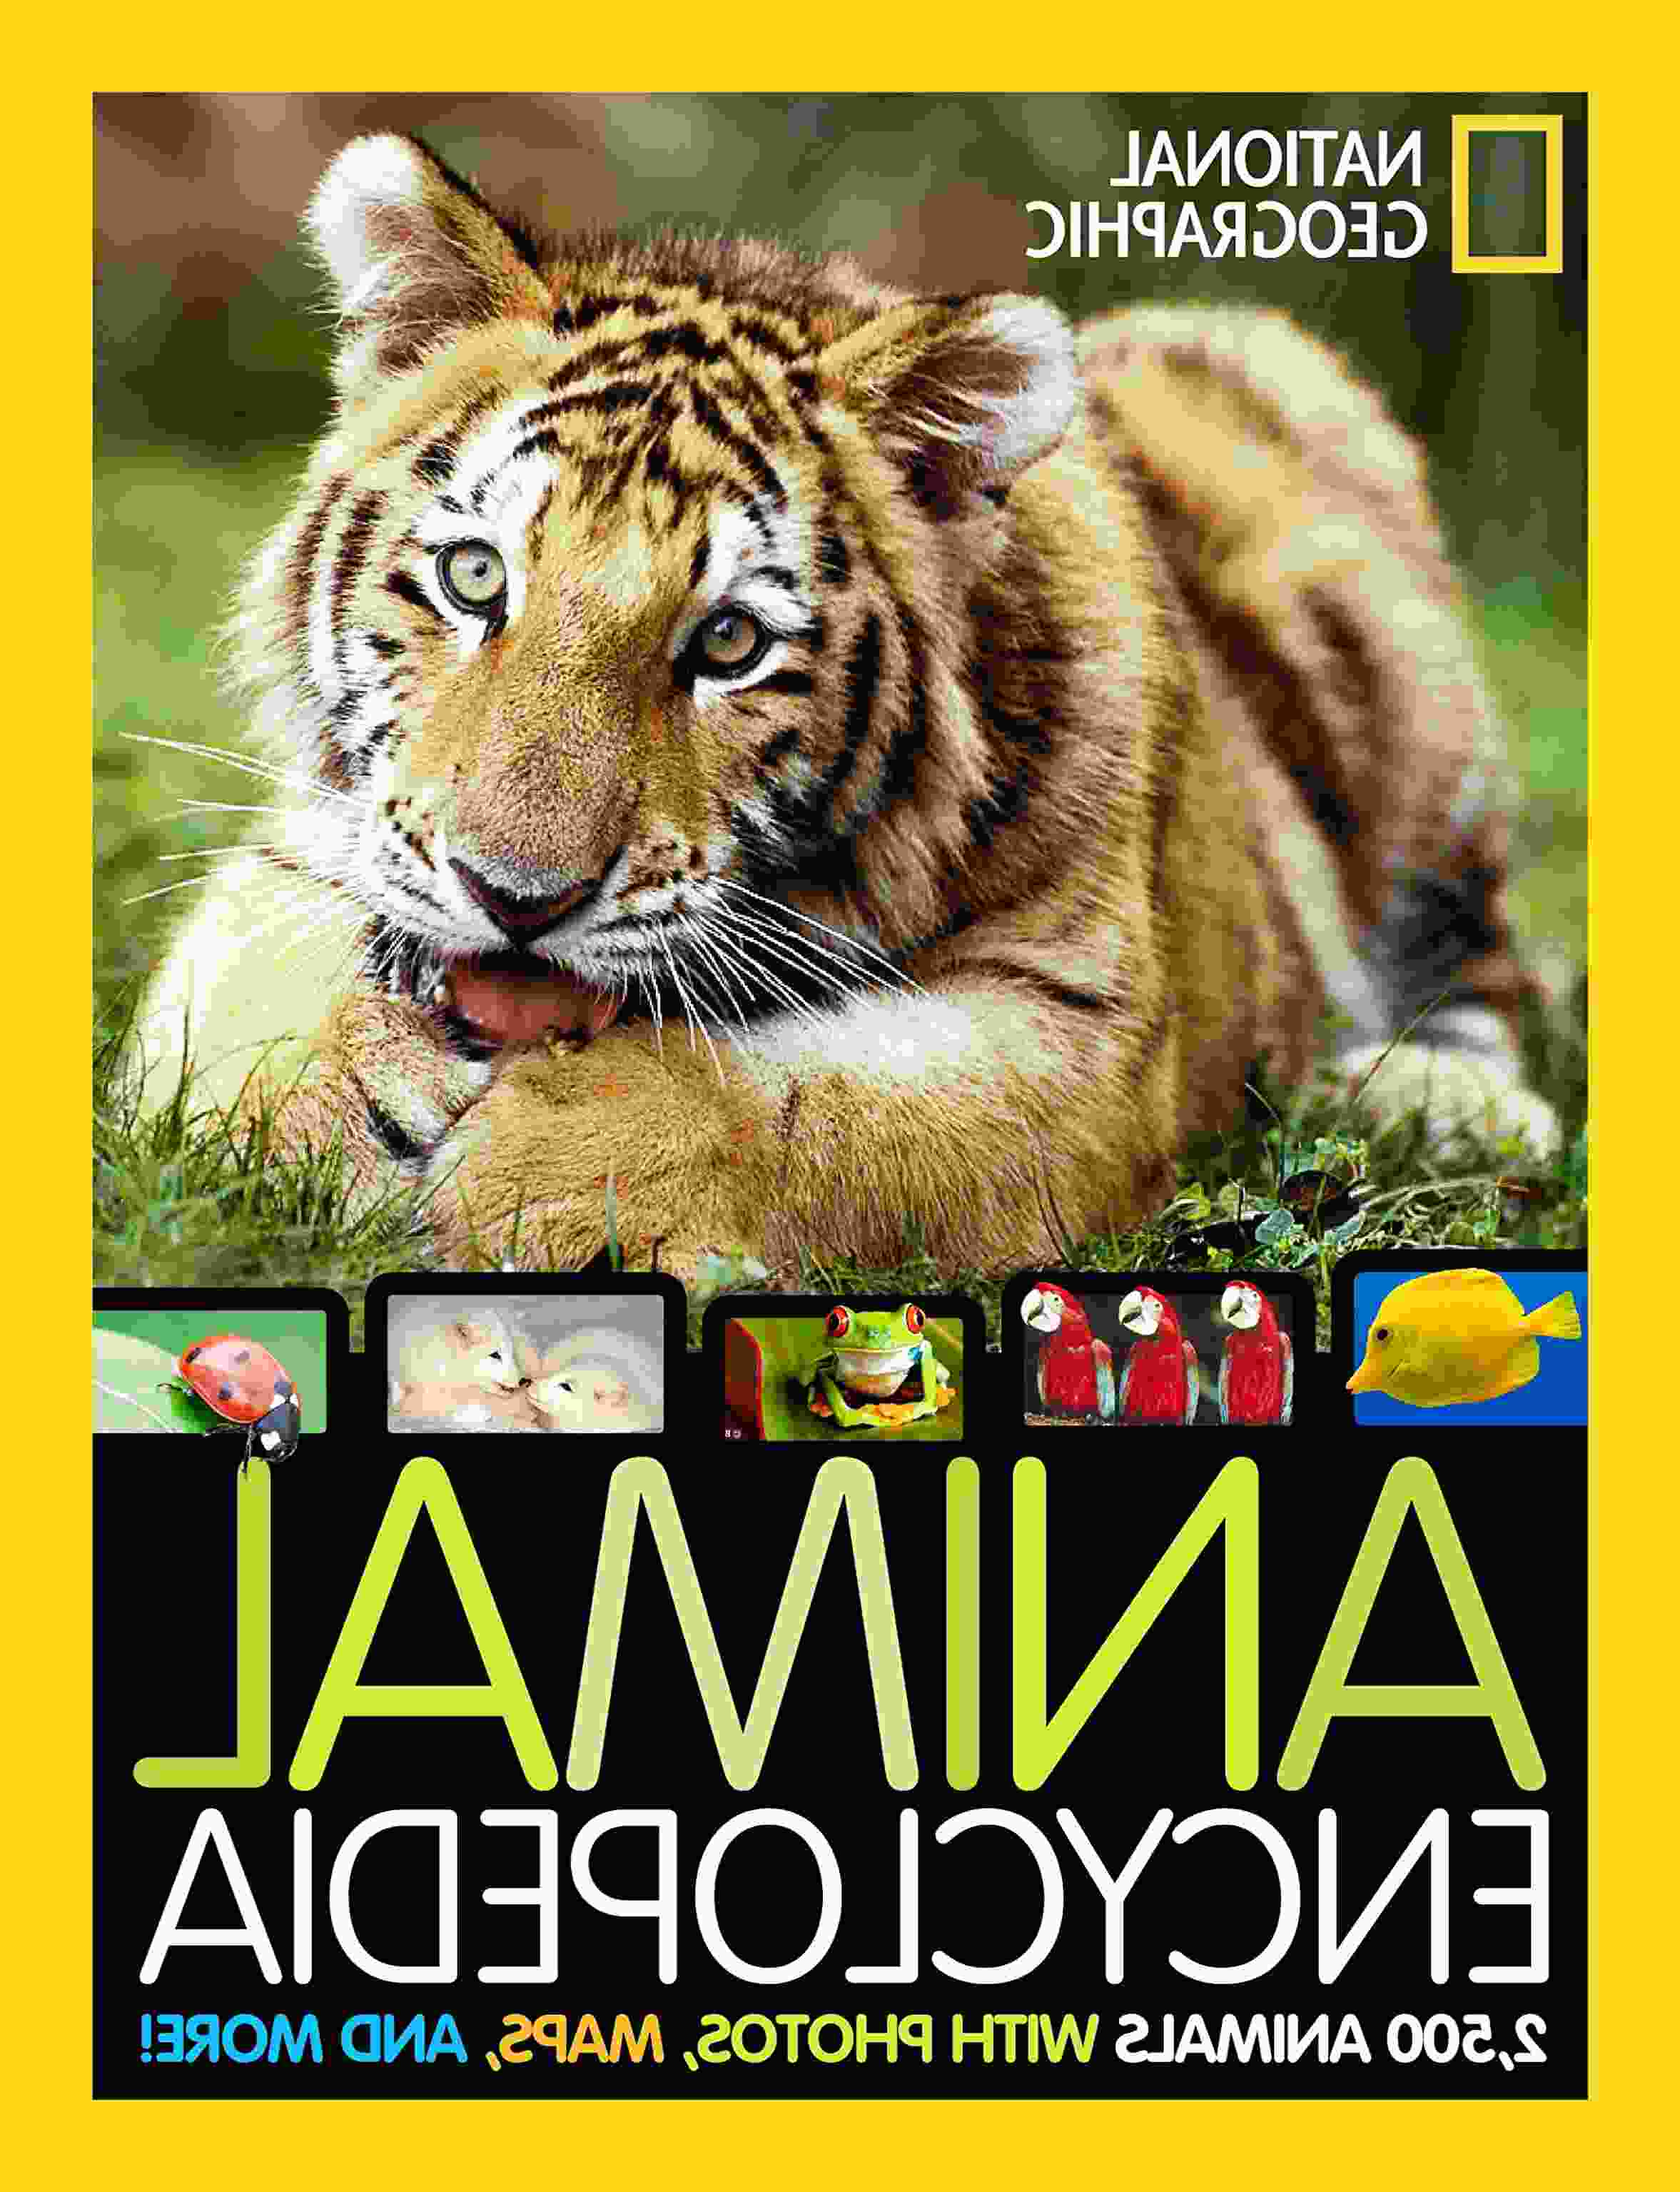 Animal Encyclopedia for sale in UK | 74 used Animal Encyclopedias